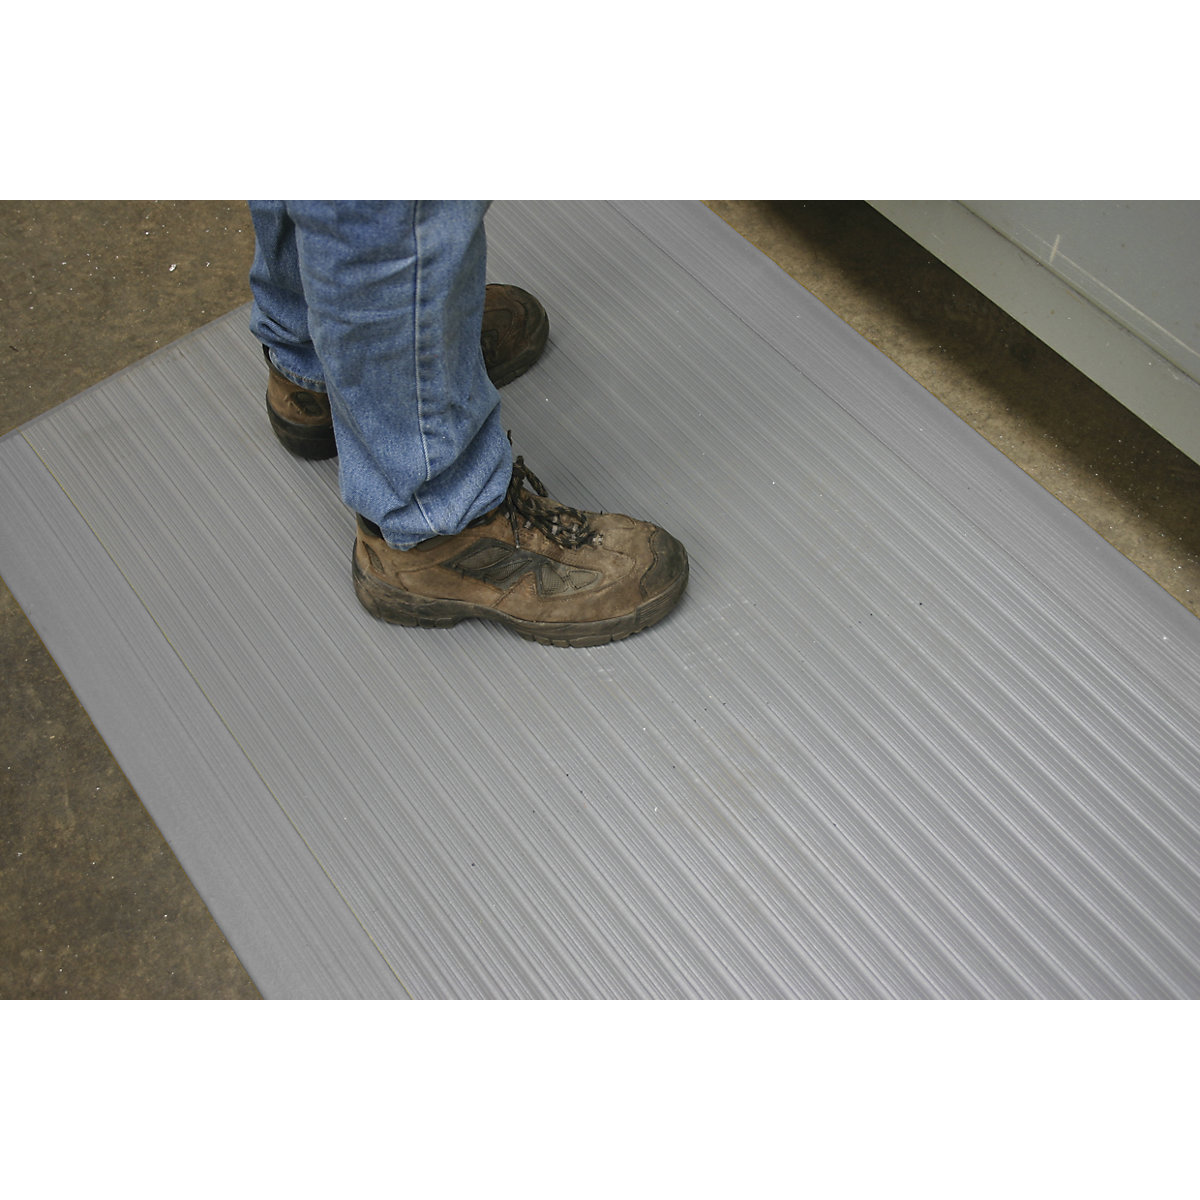 Orthomat® Ribbed anti-fatigue matting, LxW 1500 x 910 mm, grey